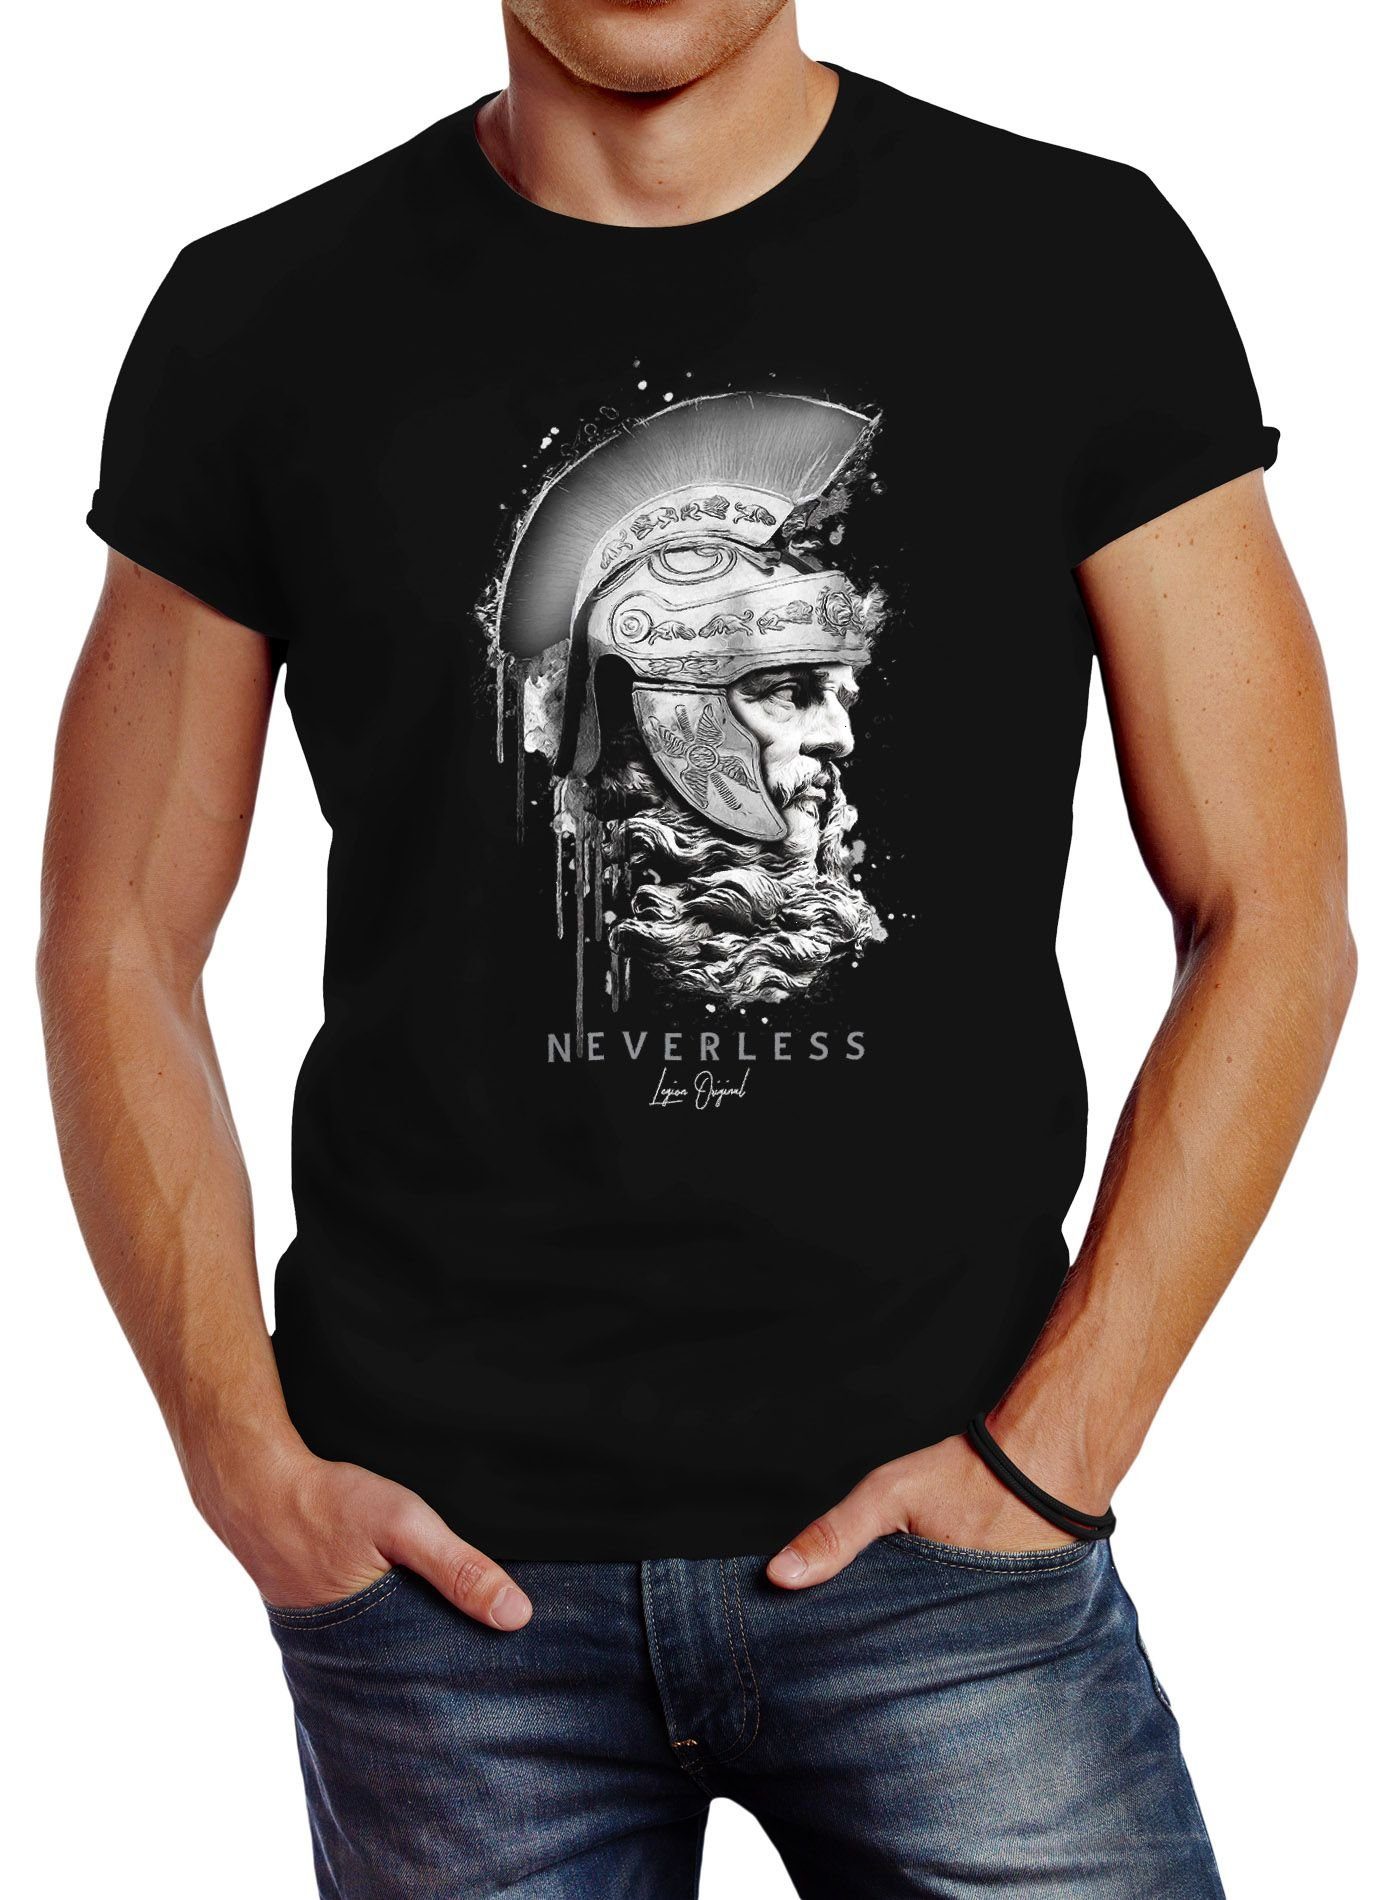 Neverless Print-Shirt Neverless® Herren T-Shirt Sparta Spartaner Kopf Helm Krieger Fashion Streetstyle mit Print schwarz | T-Shirts